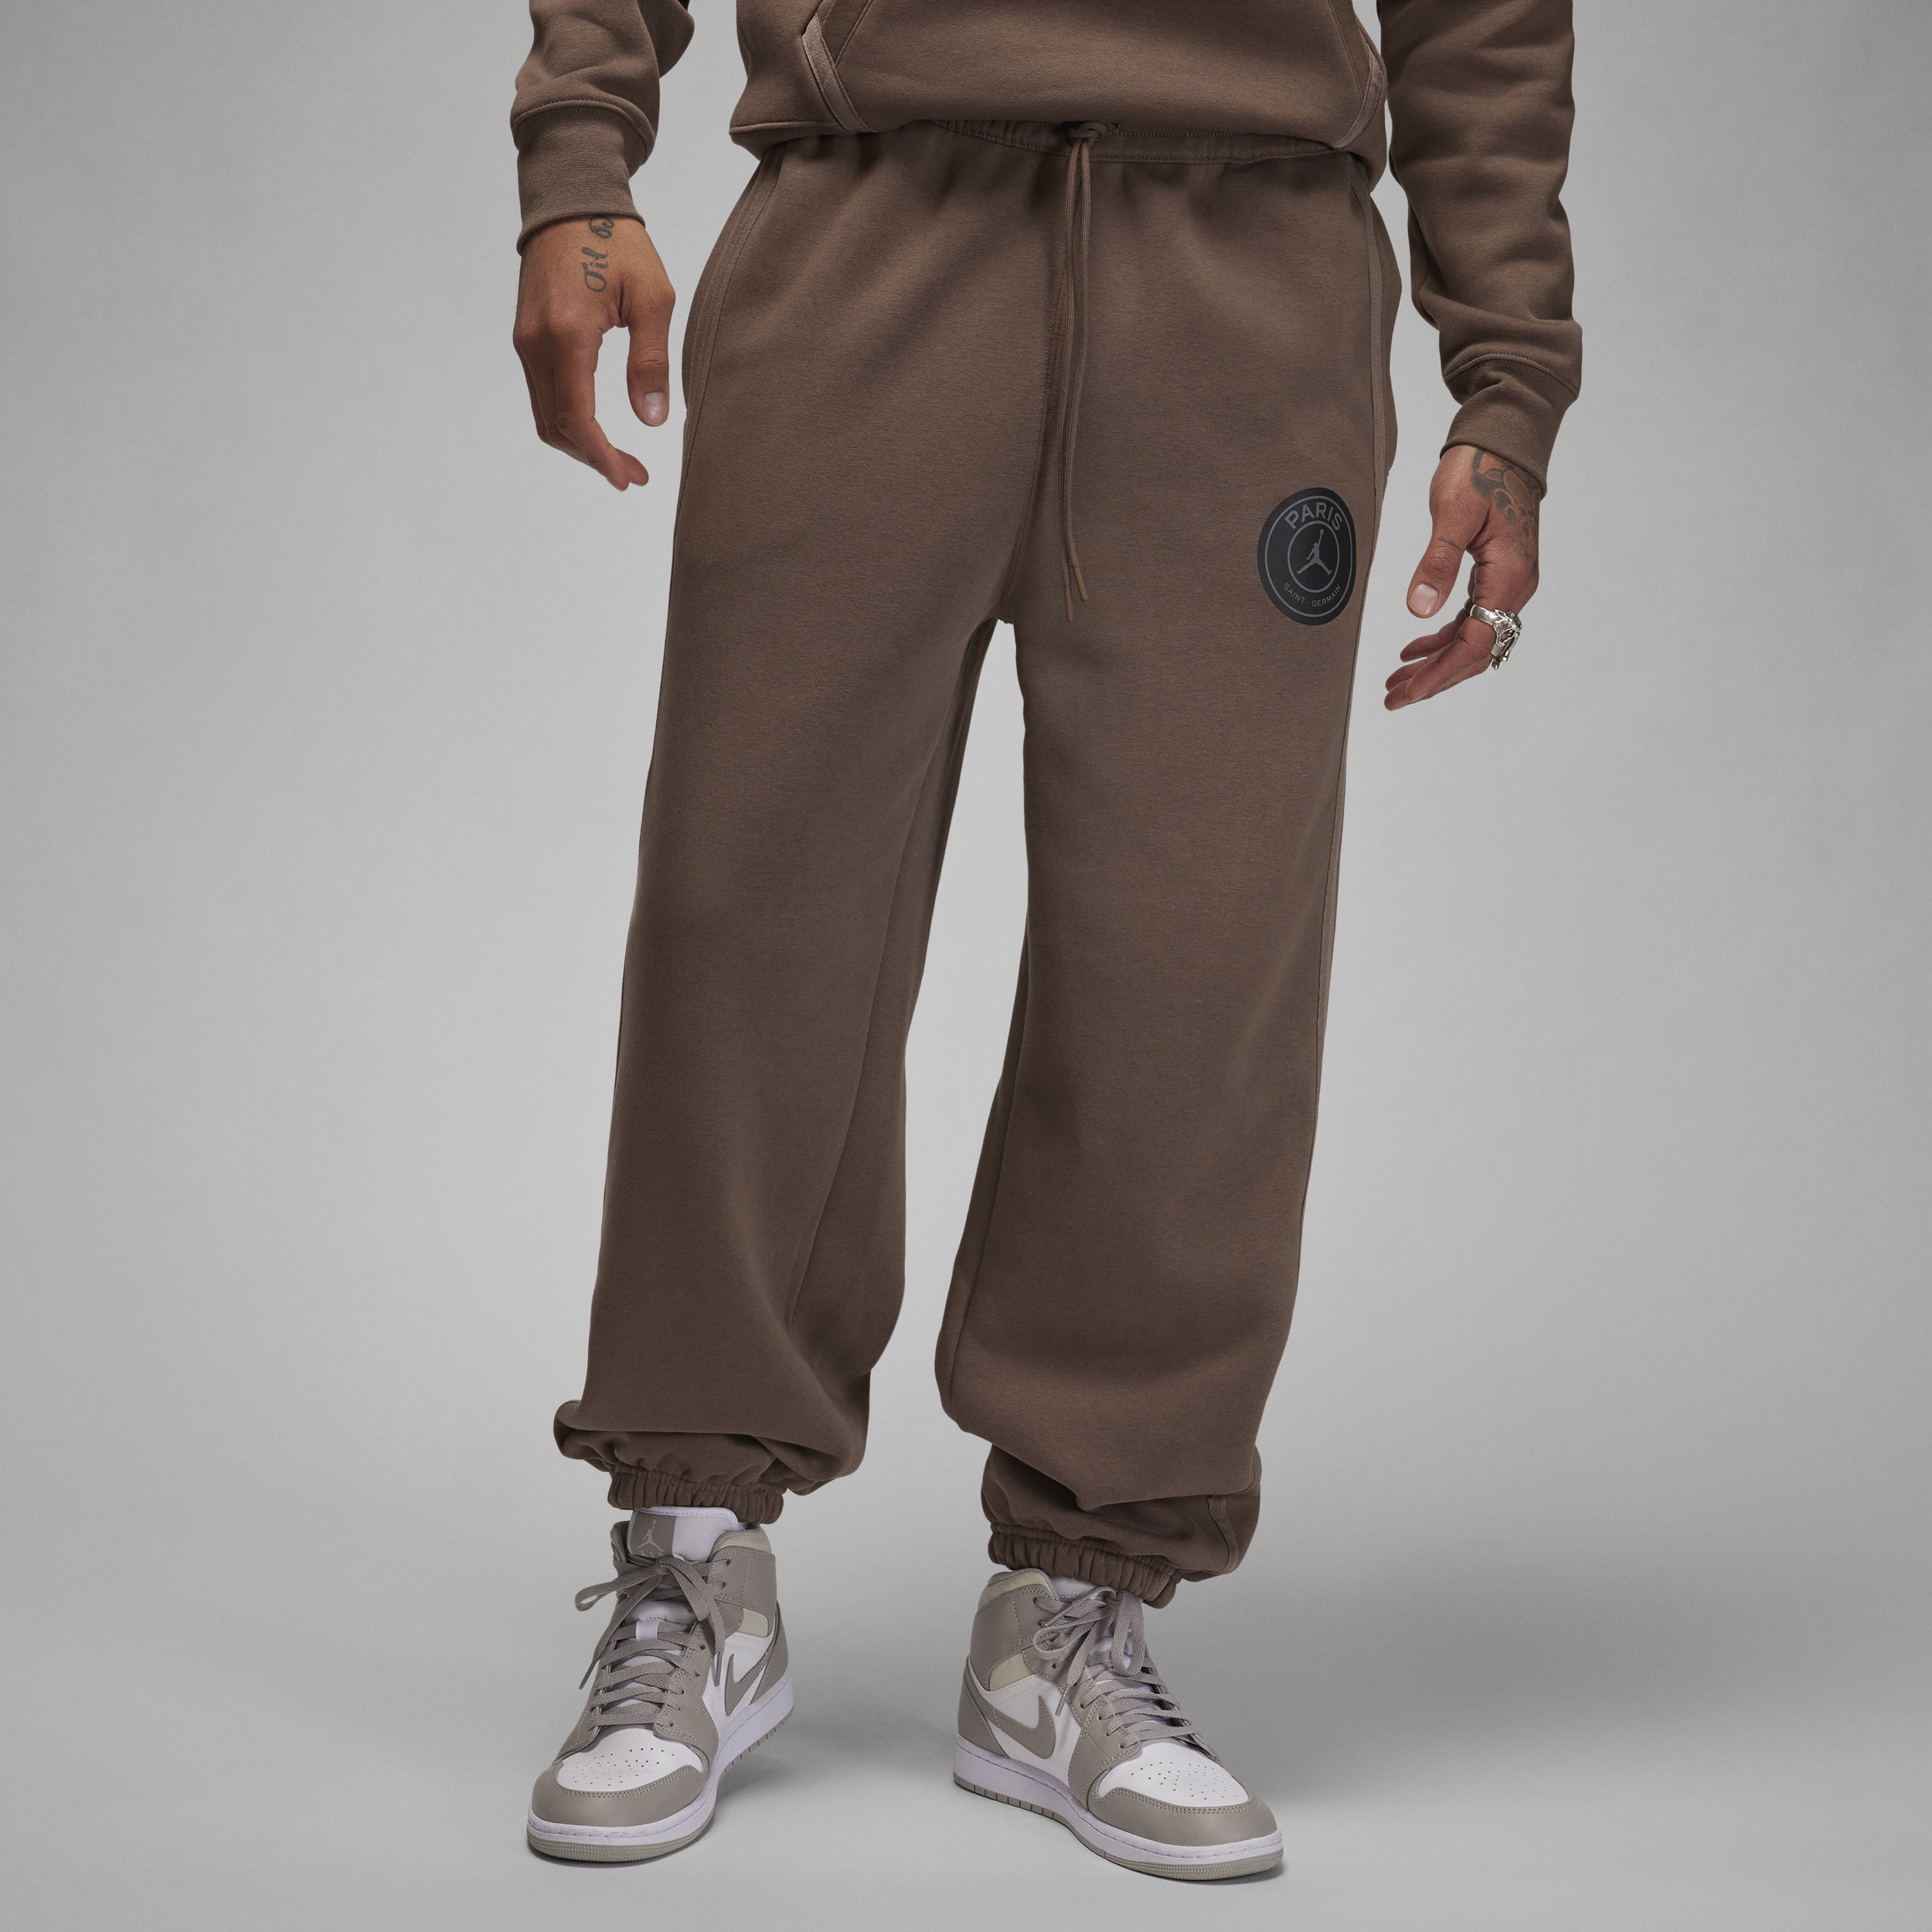 Nike Paris Saint-Germain Pantalón de tejido Fleece - Hombre - Marrón